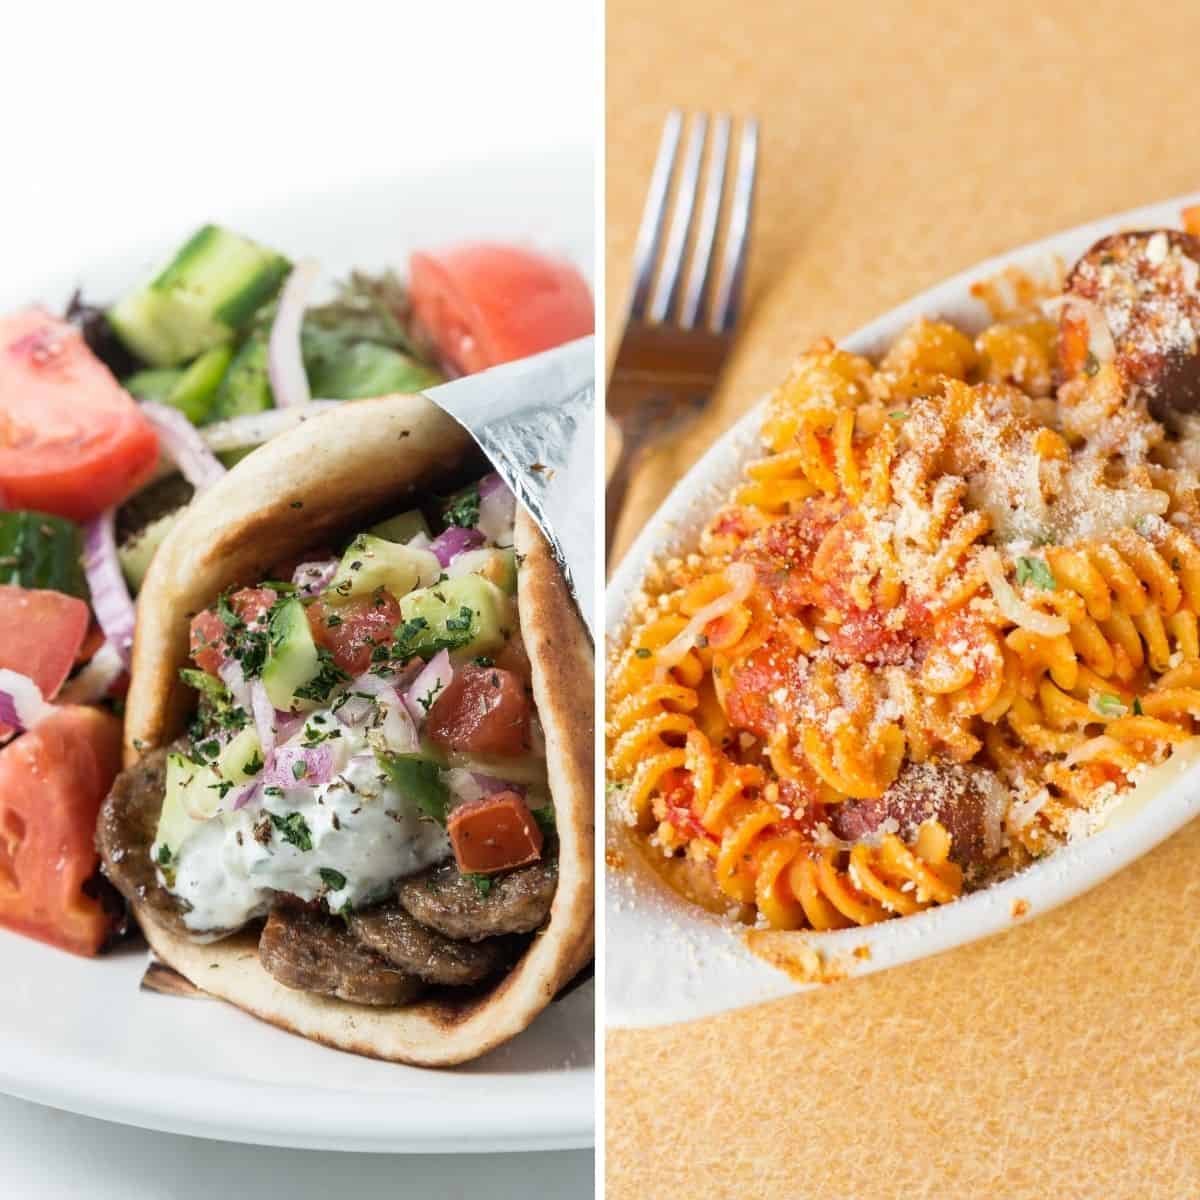 garlic chicken veggies pasta and chicken gyros images shown to make as under 500 calorie meals